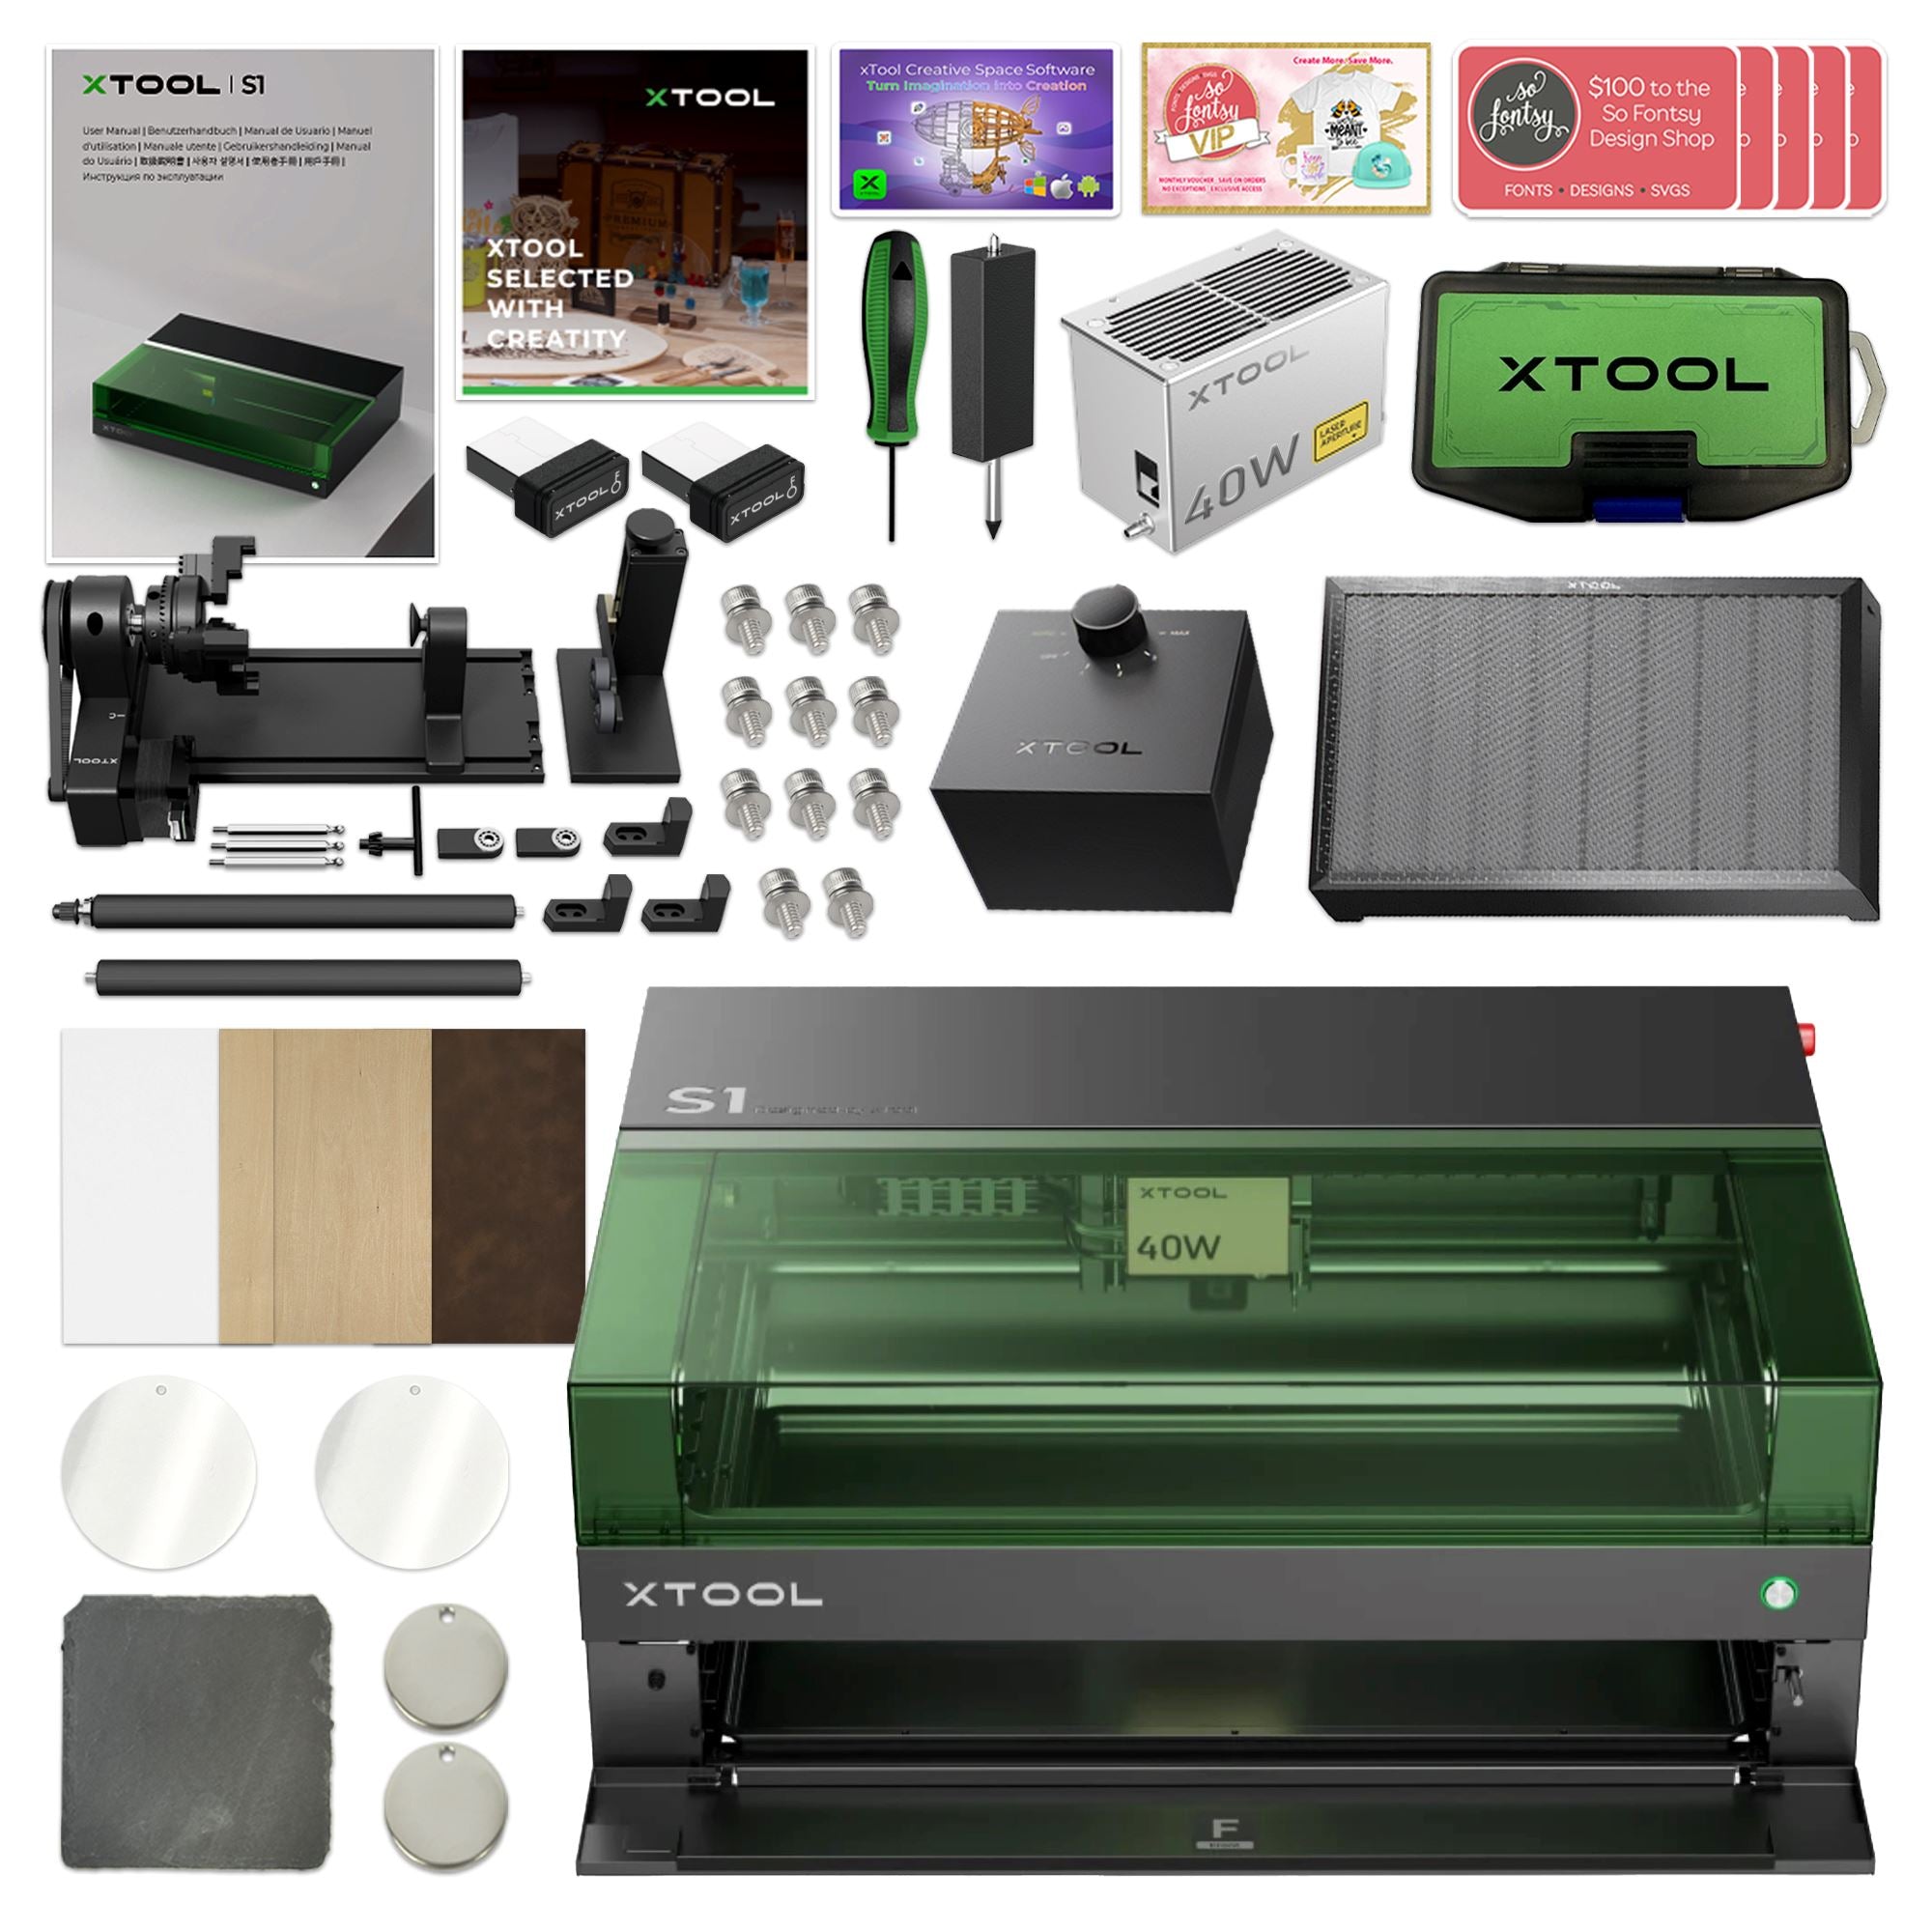 xTool S1 Laser Cutter & Engraver Machine Bundle w/ Rotary, Rail & Riser - 40W Diode Laser +